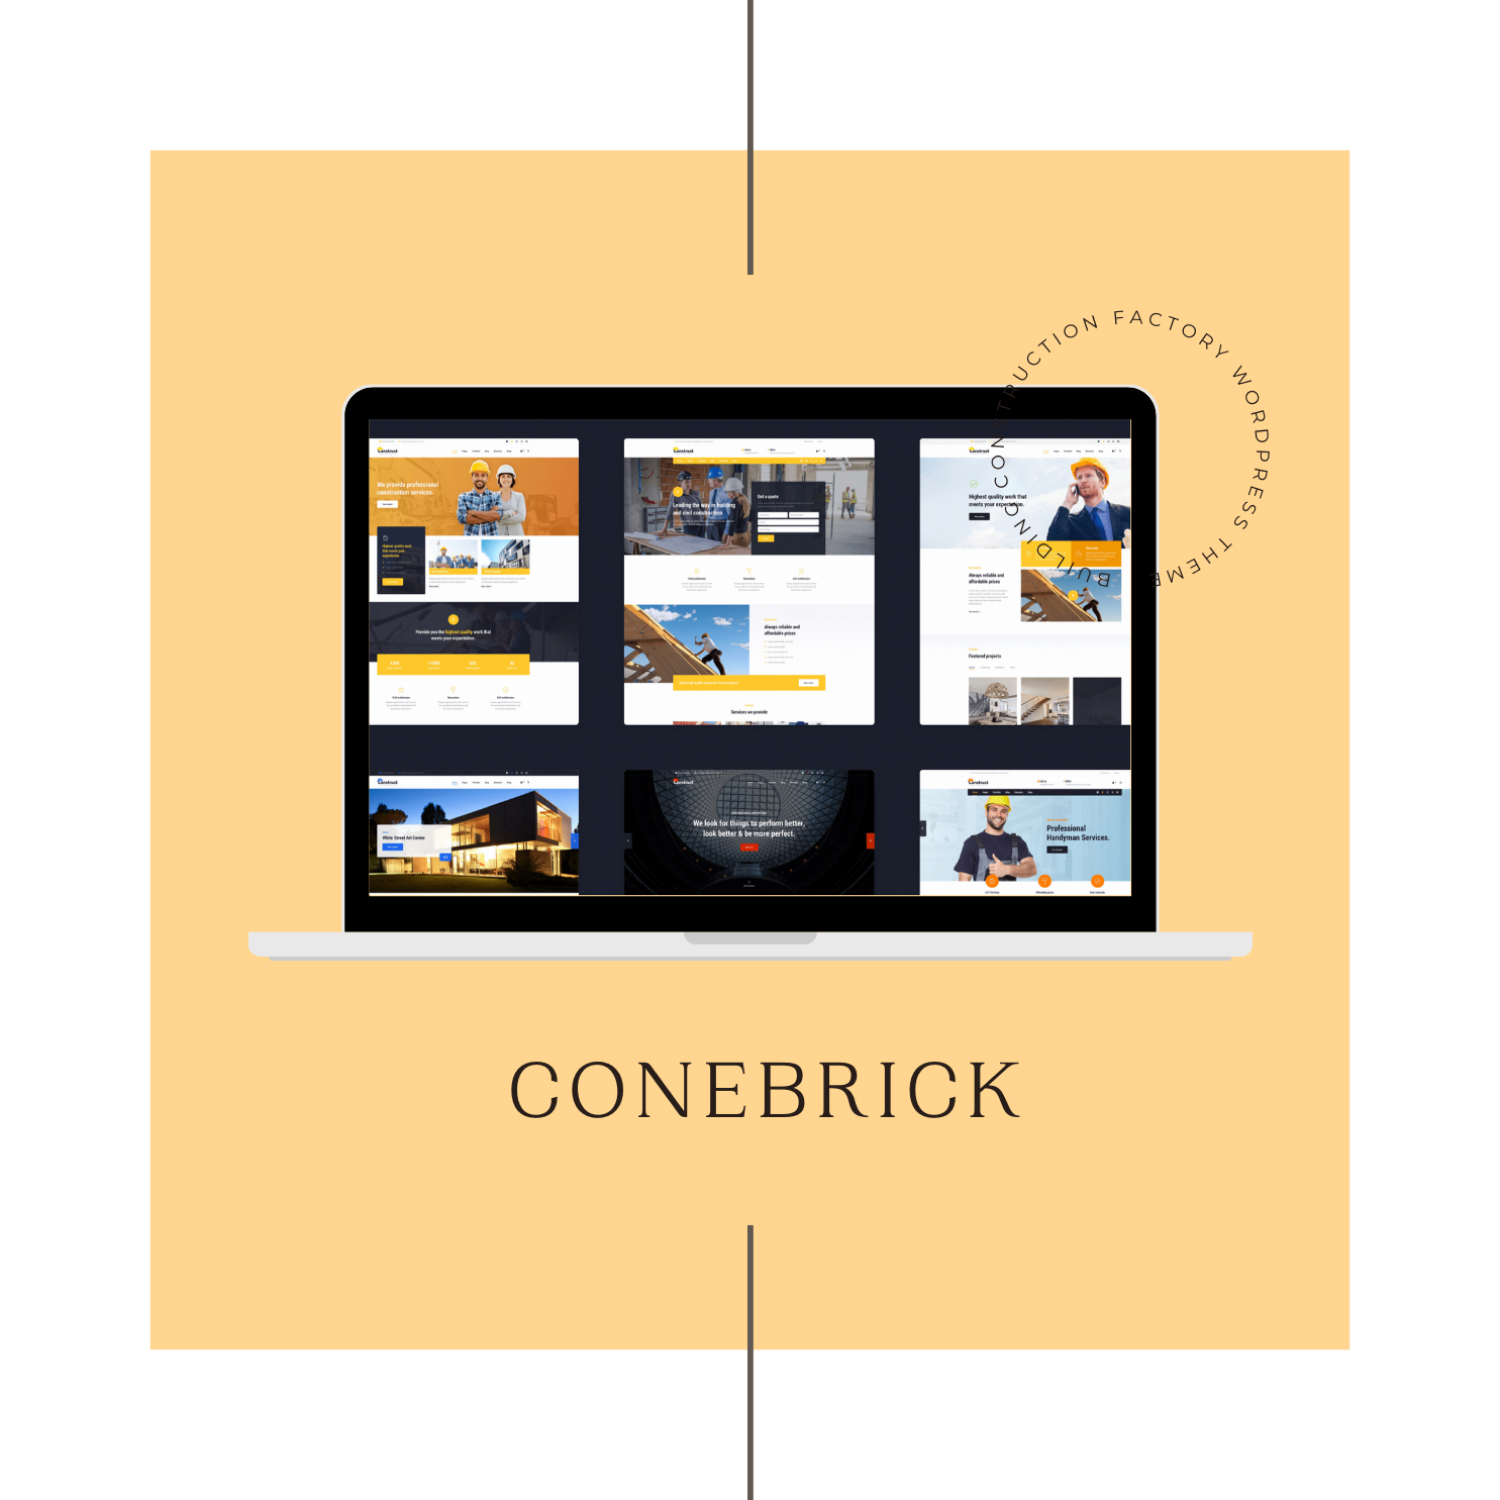 Conebrick - Building Construction Factory WordPress Theme.